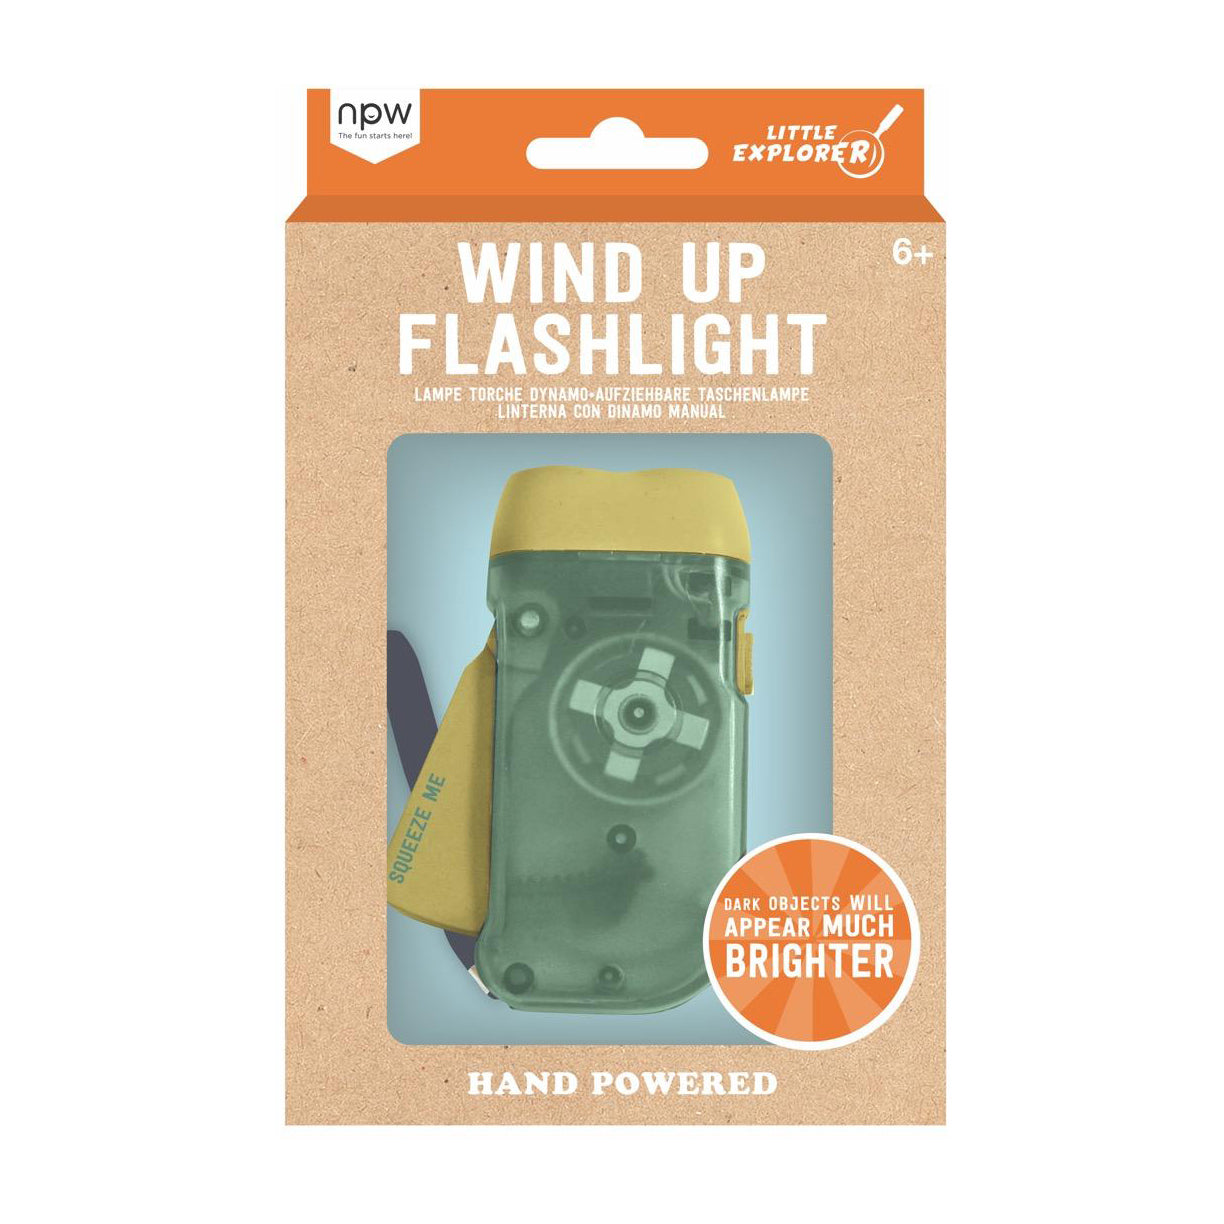 Wind Up Flashlight